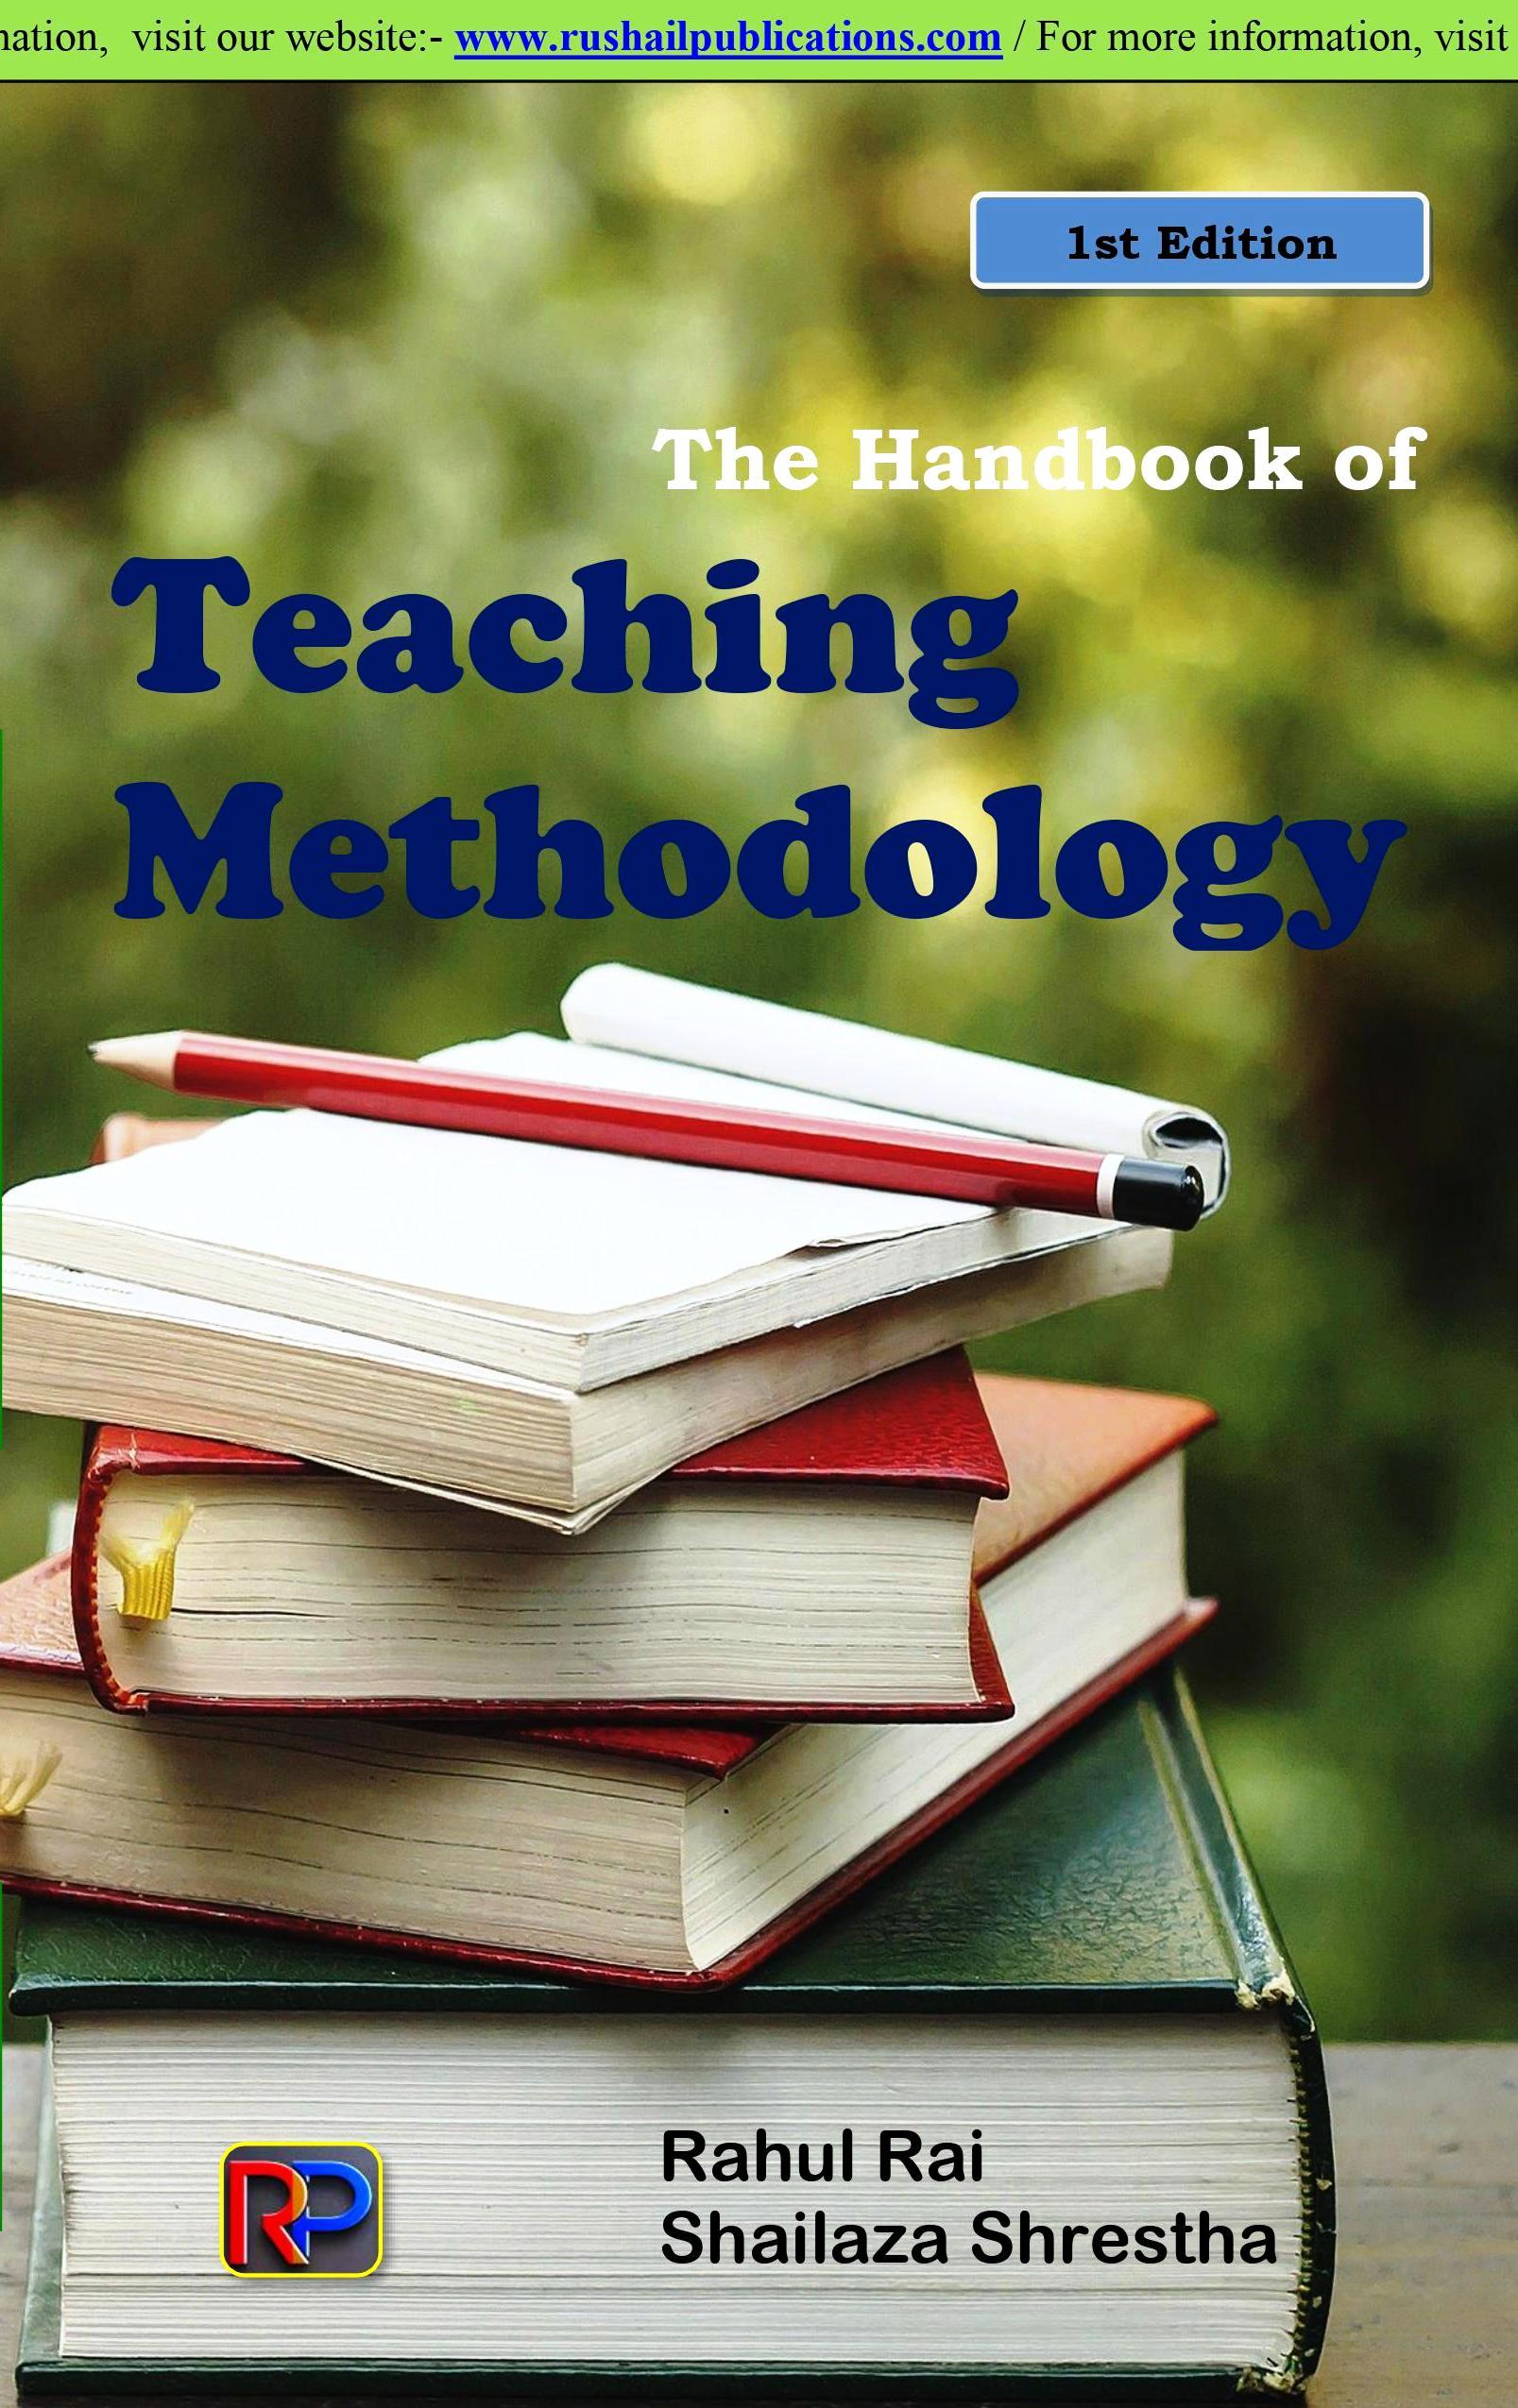 The Handbook of Teaching Methodology